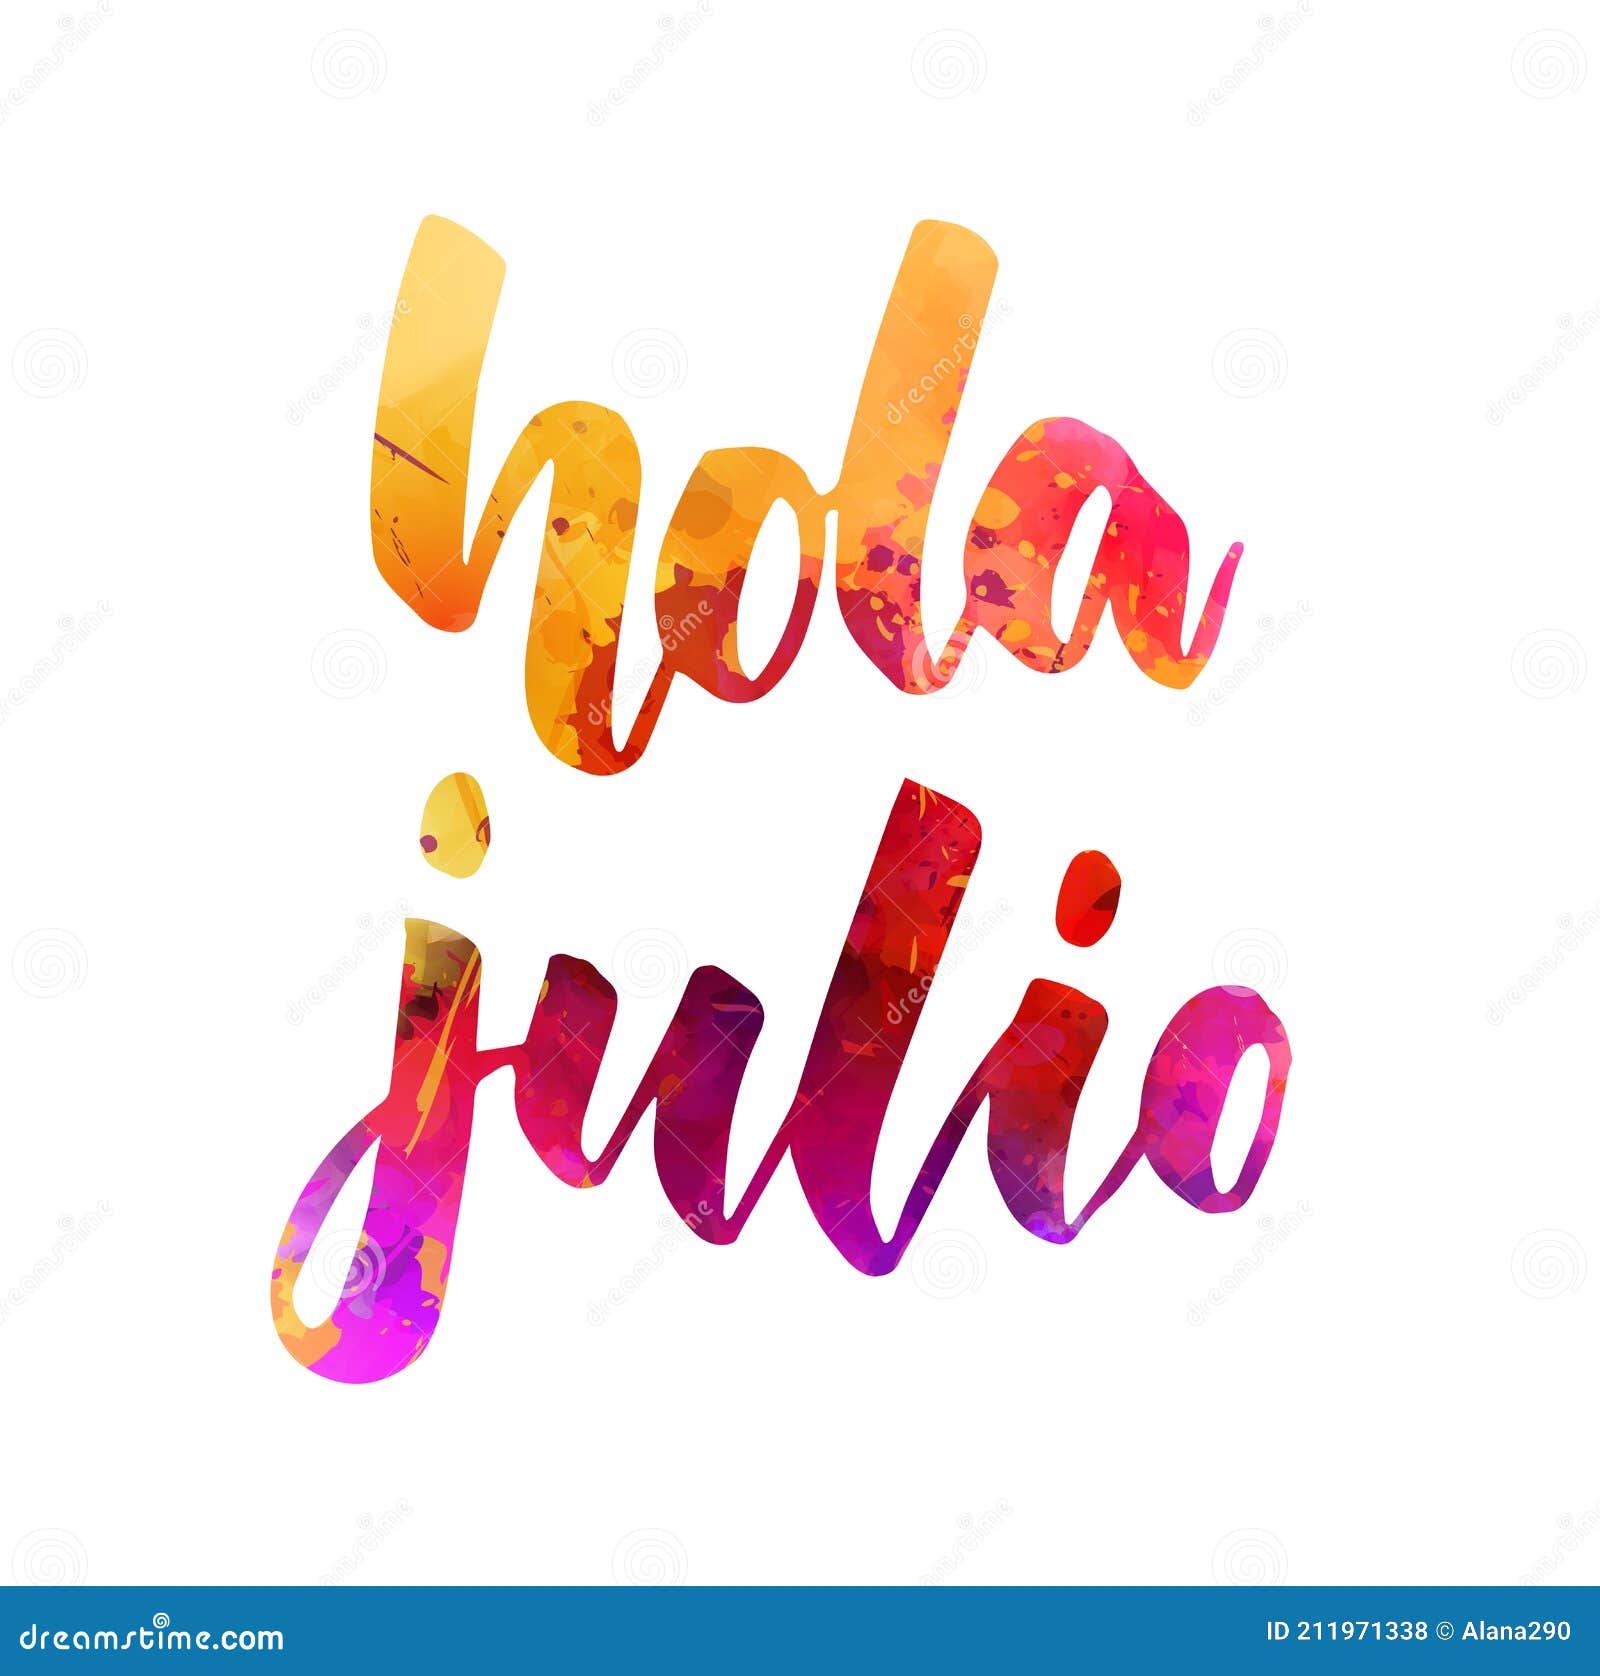 hola julio - watercolor lettering